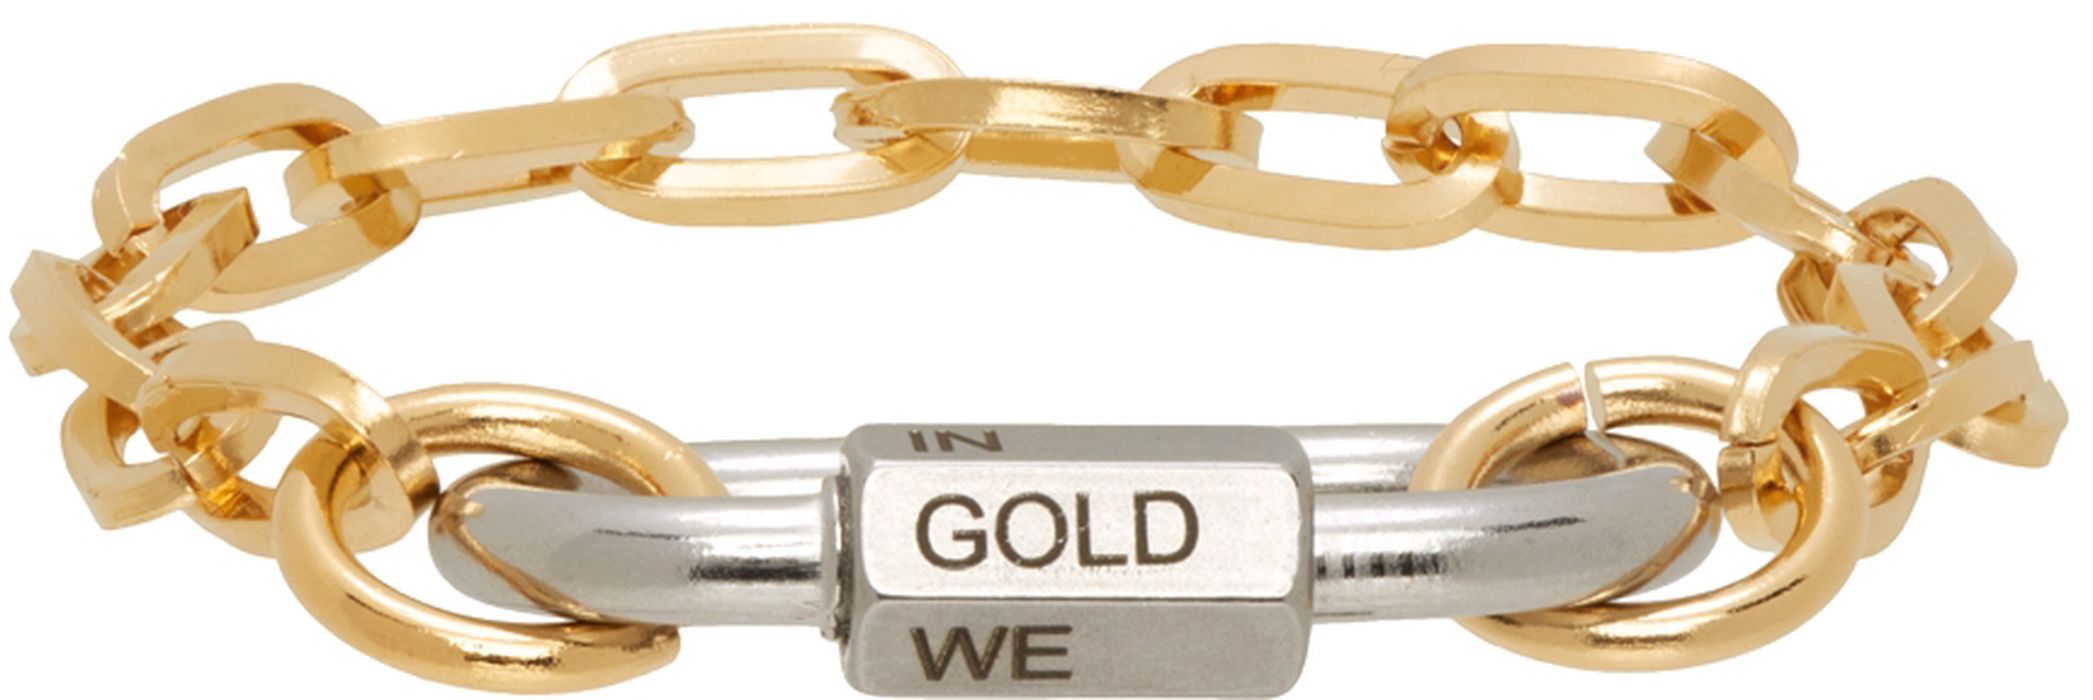 IN GOLD WE TRUST PARIS Silver & Gold Steel Link Bracelet